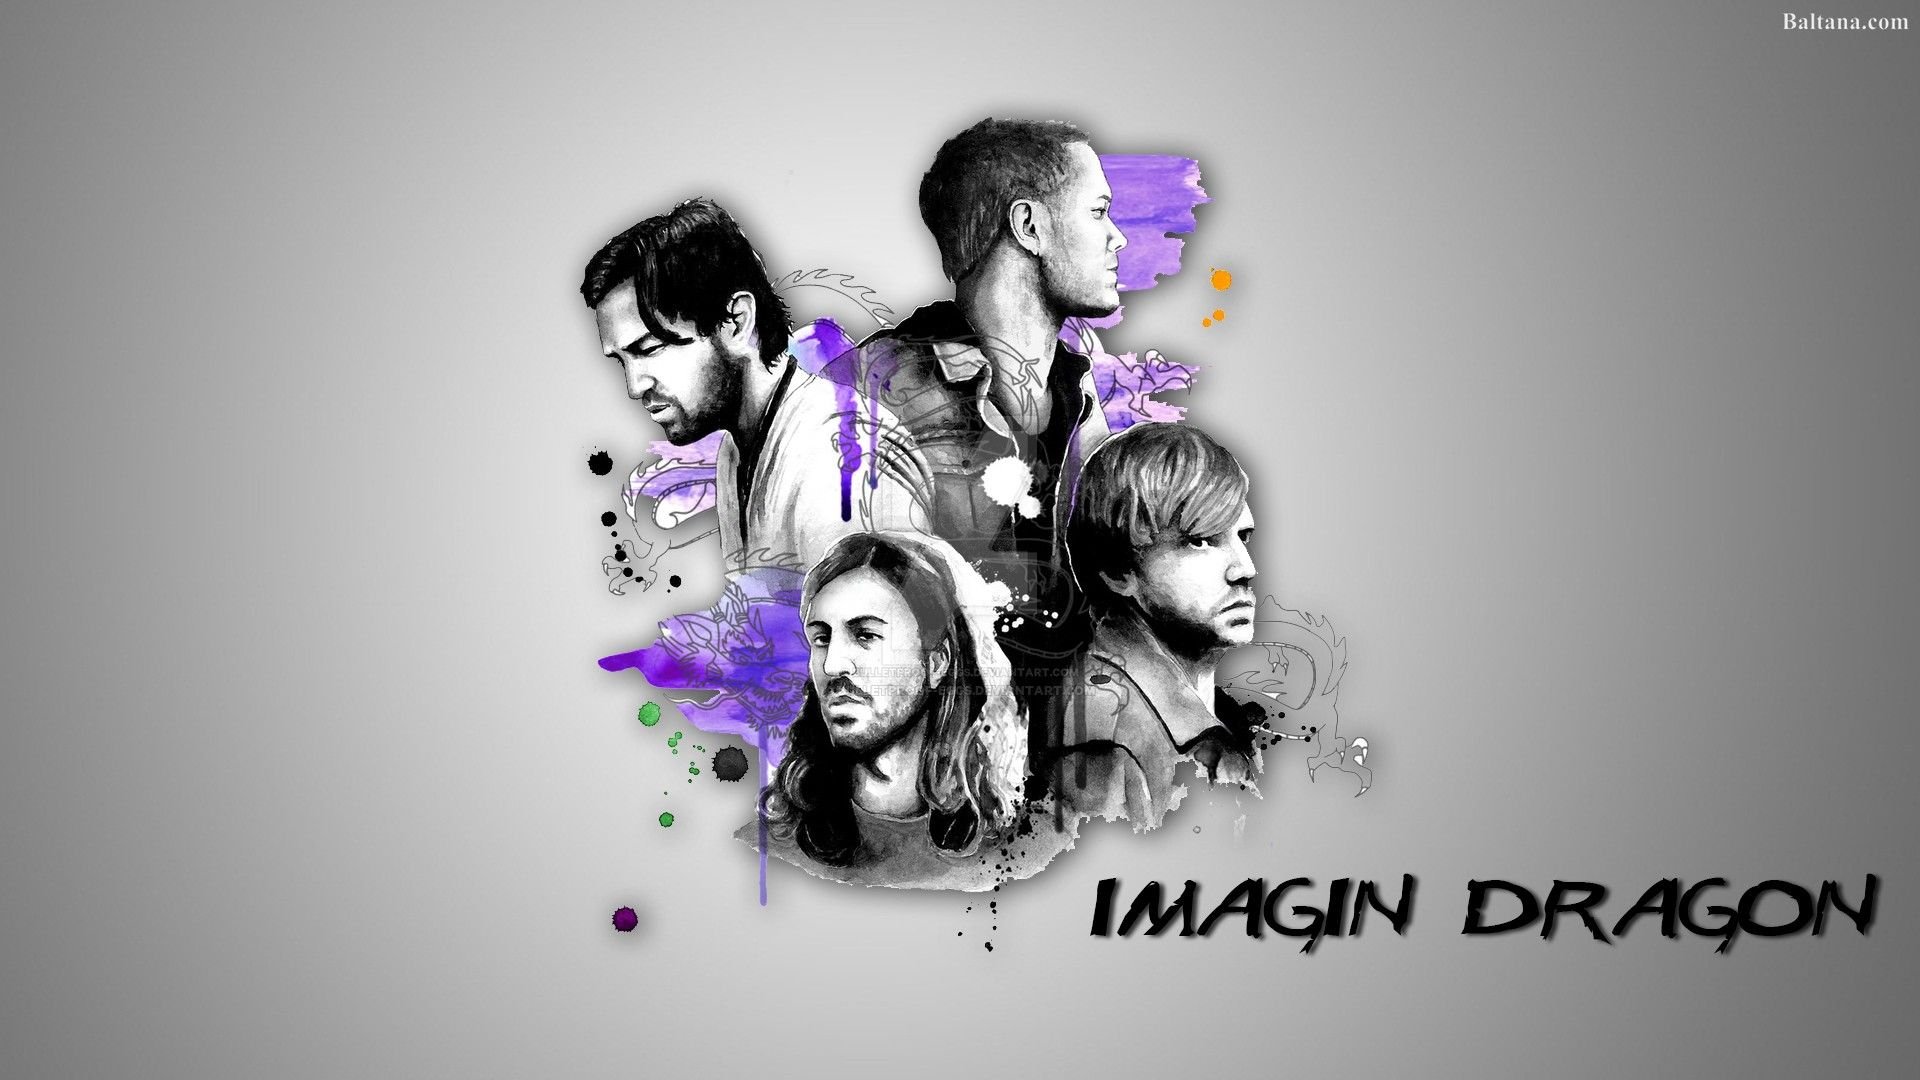 Image dragon песни. Группа имаджин драгон. Imagine Dragons обои. Заставка для группы. Imagine Dragons арт.